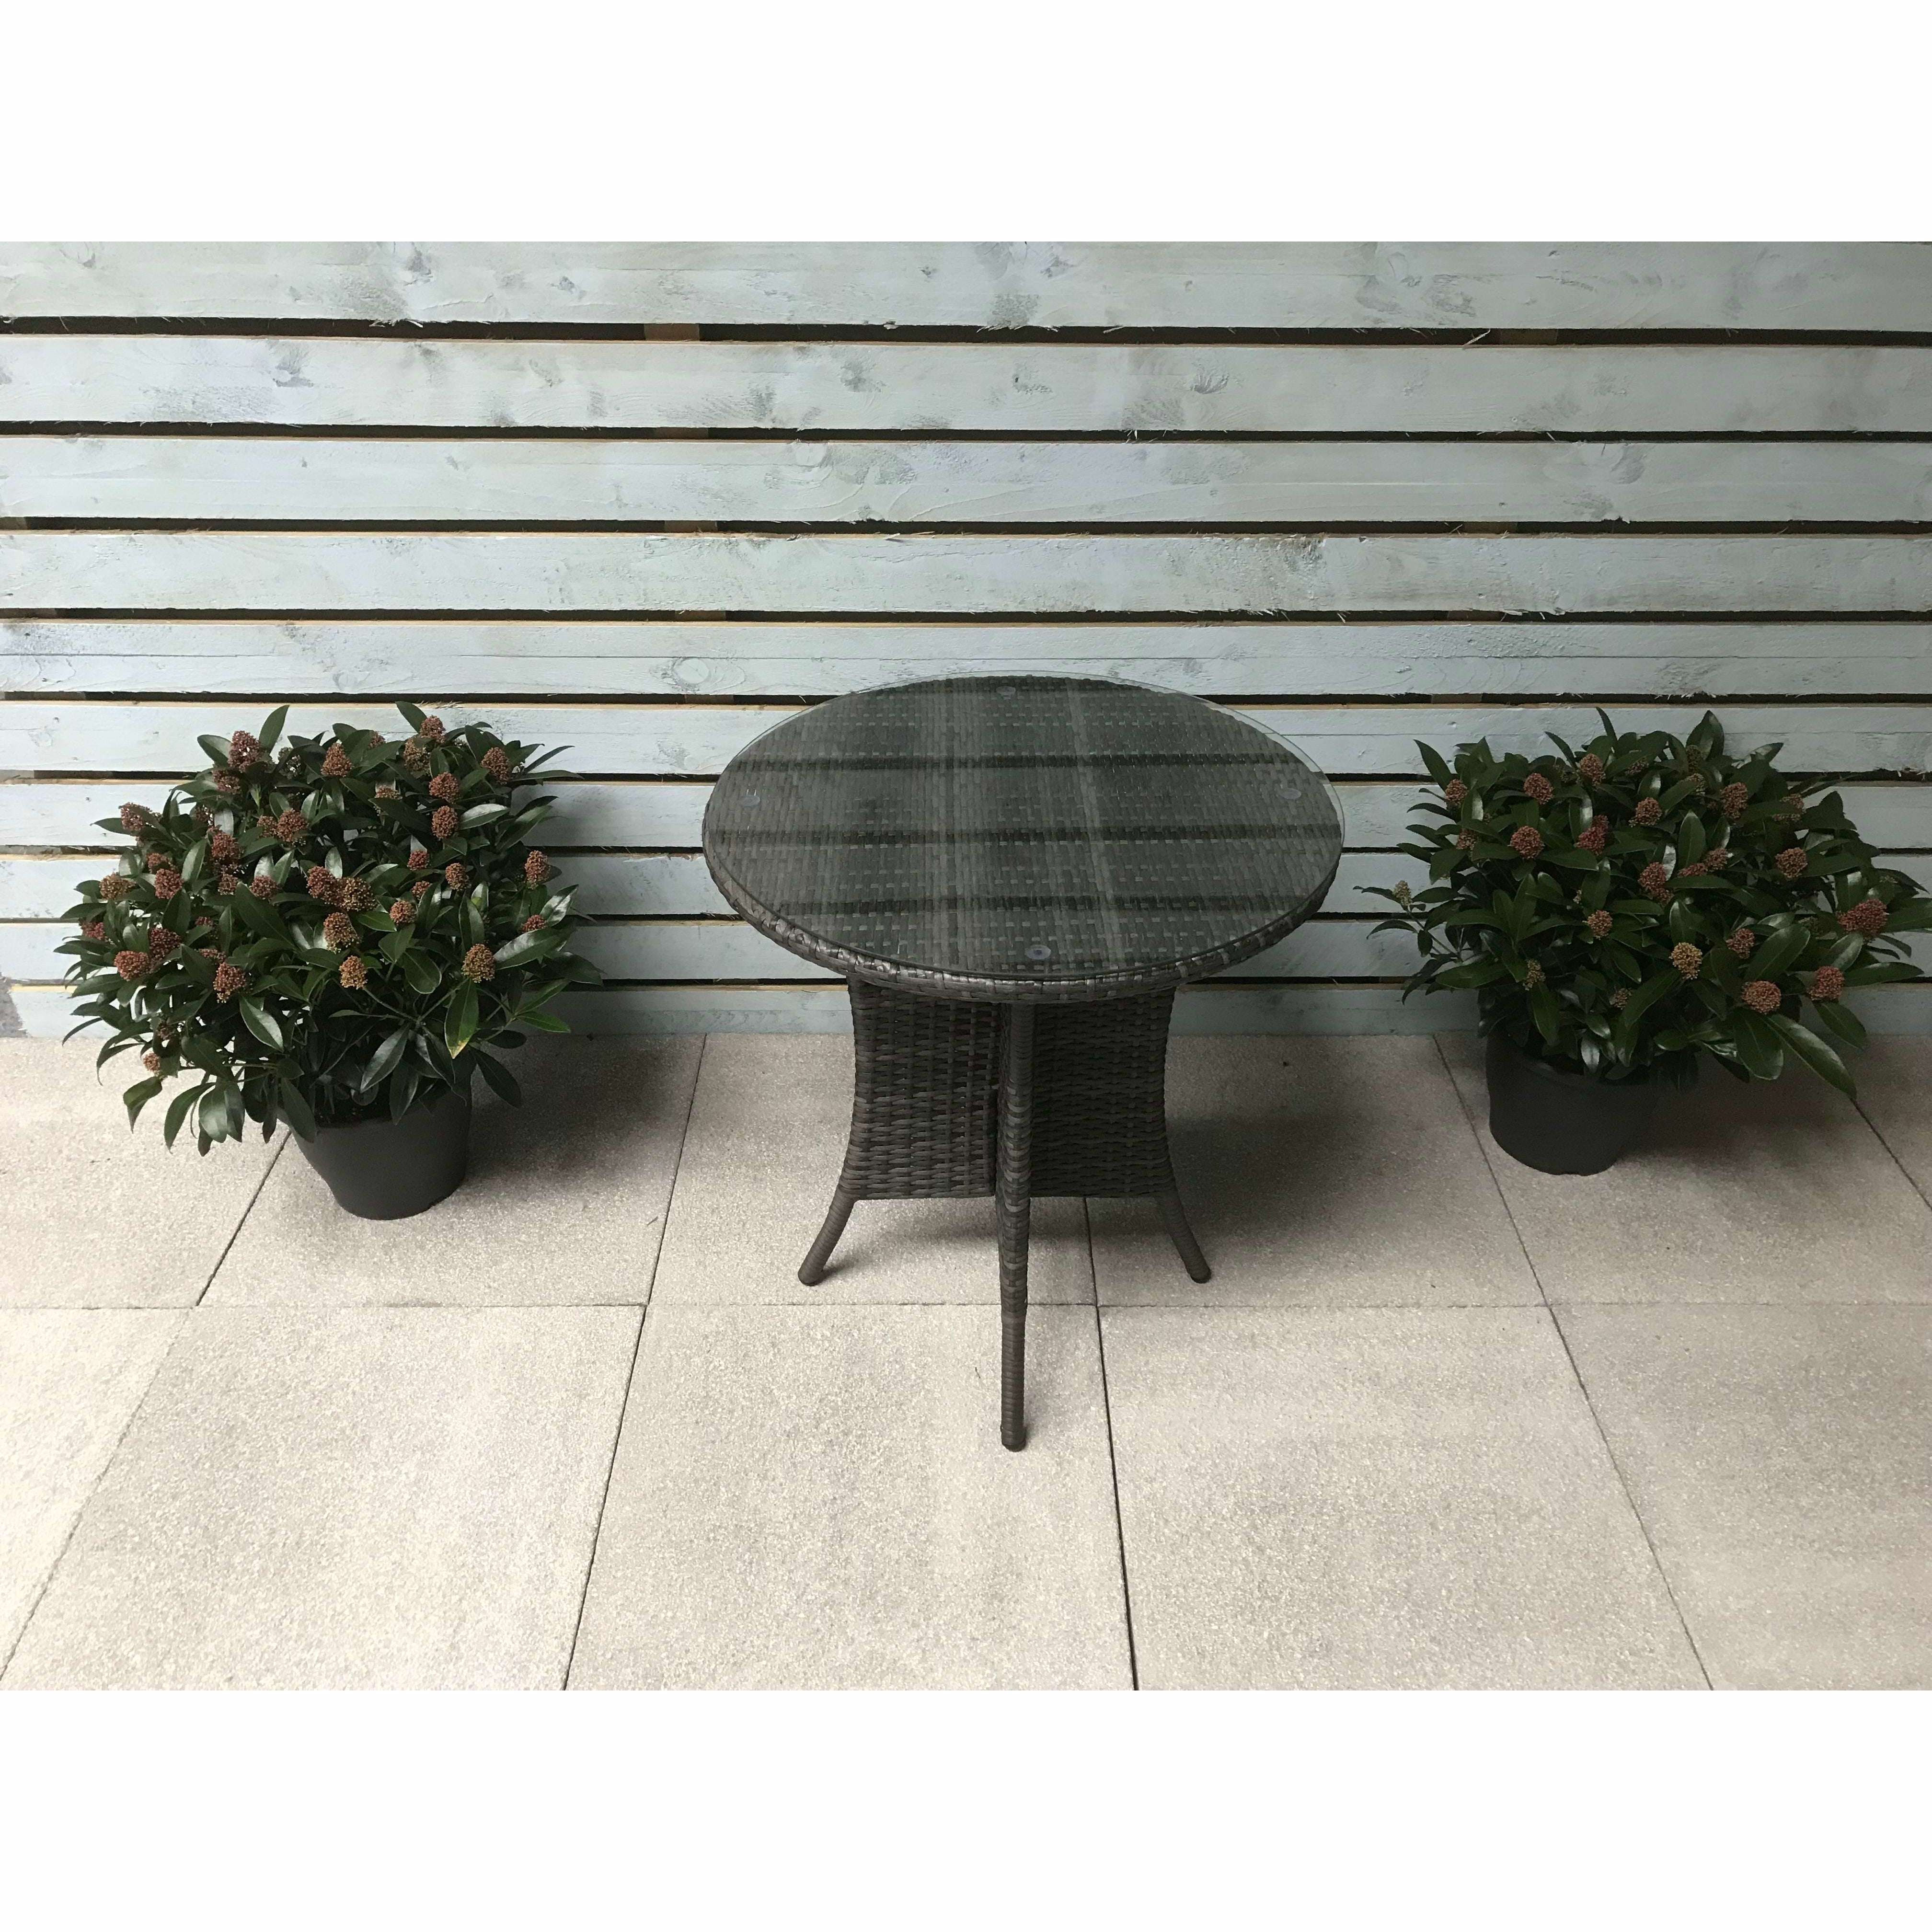 Exceptional Garden:Signature Weave Emily 70cm Bistro Table